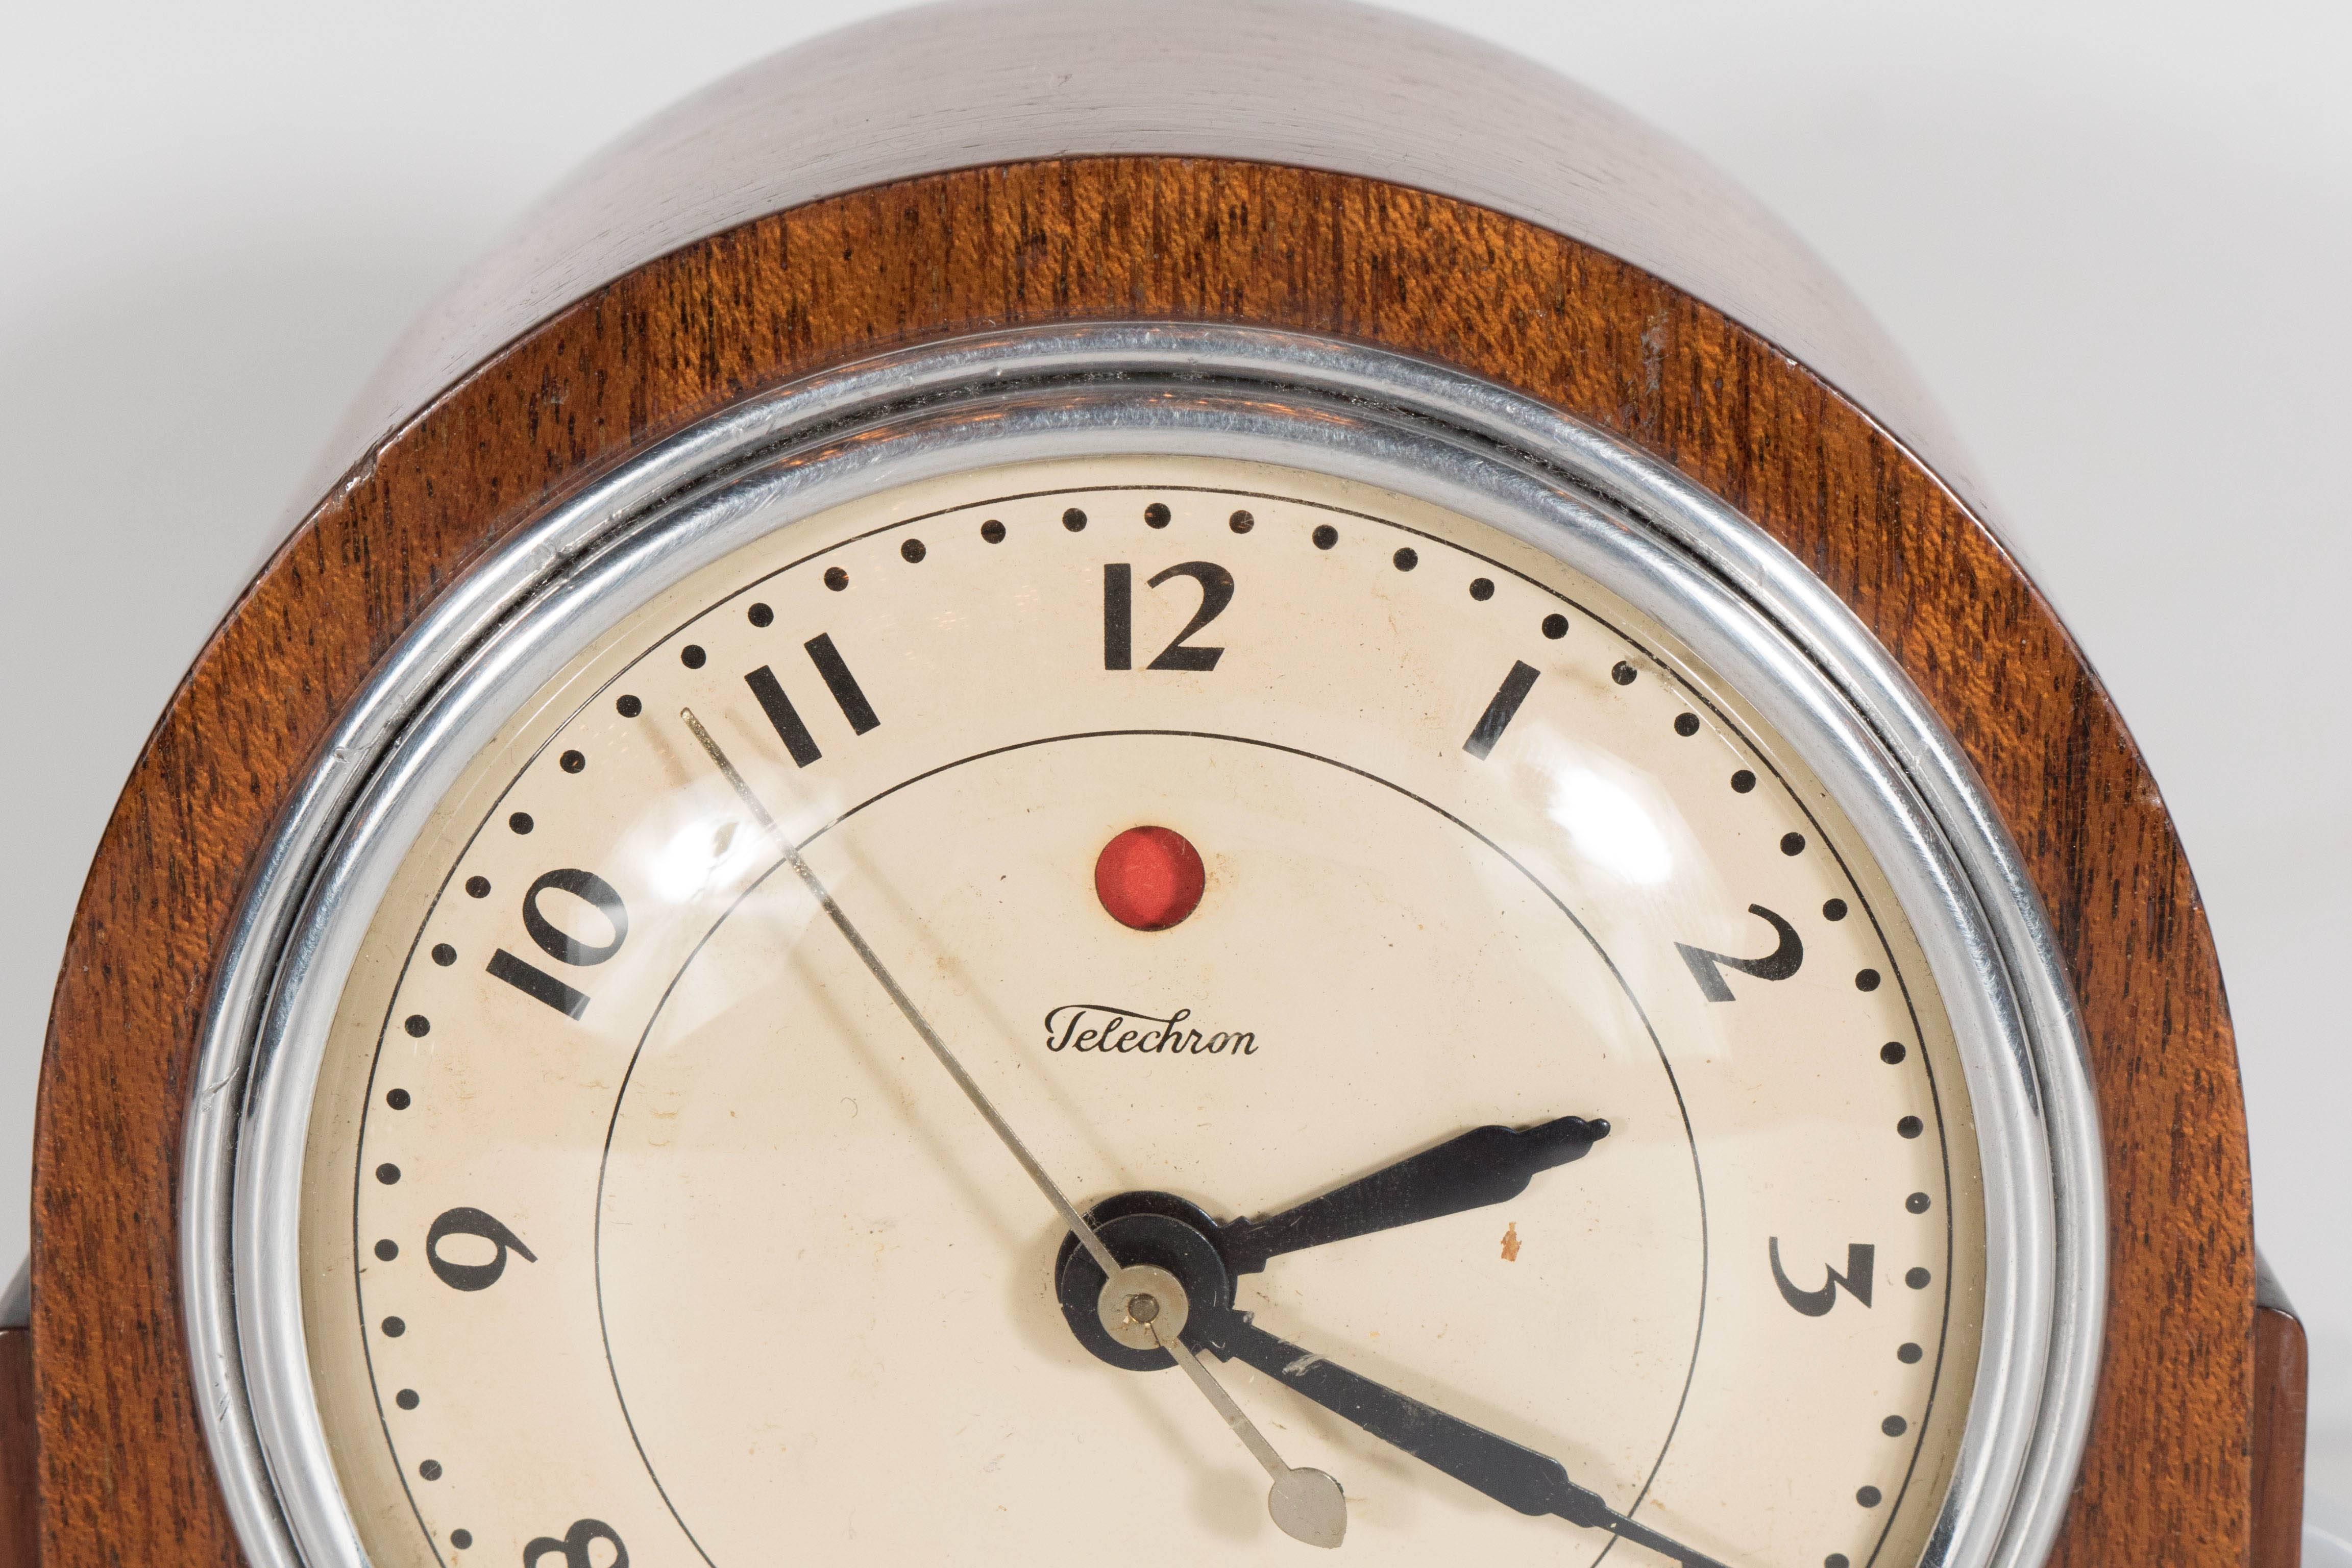 American Exemplary Streamline Art Deco Mahogany and Chrome Table Clock by Telechron